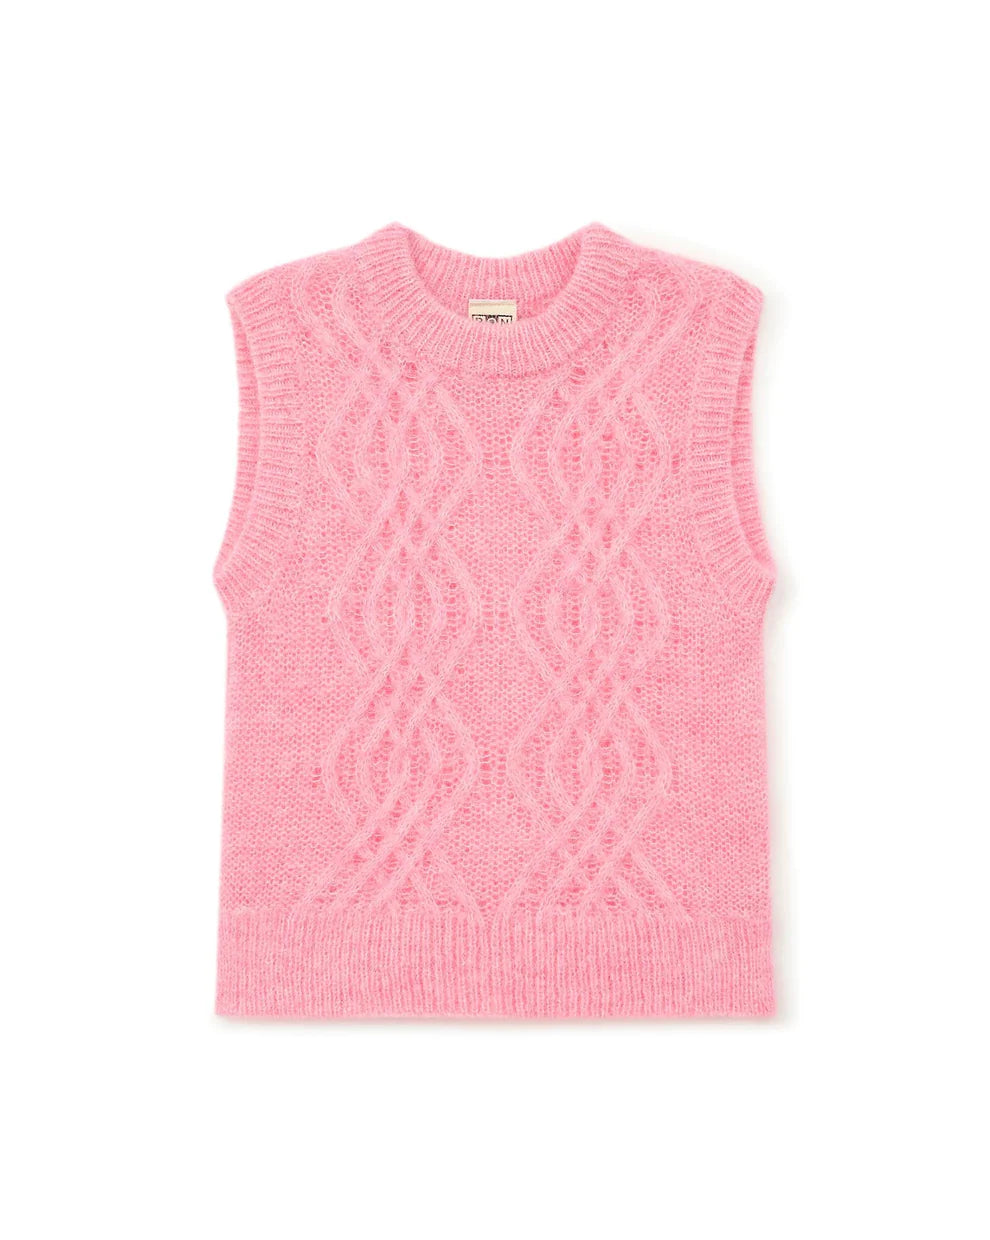 Bernard Pink Twisted Sleeveless Sweater